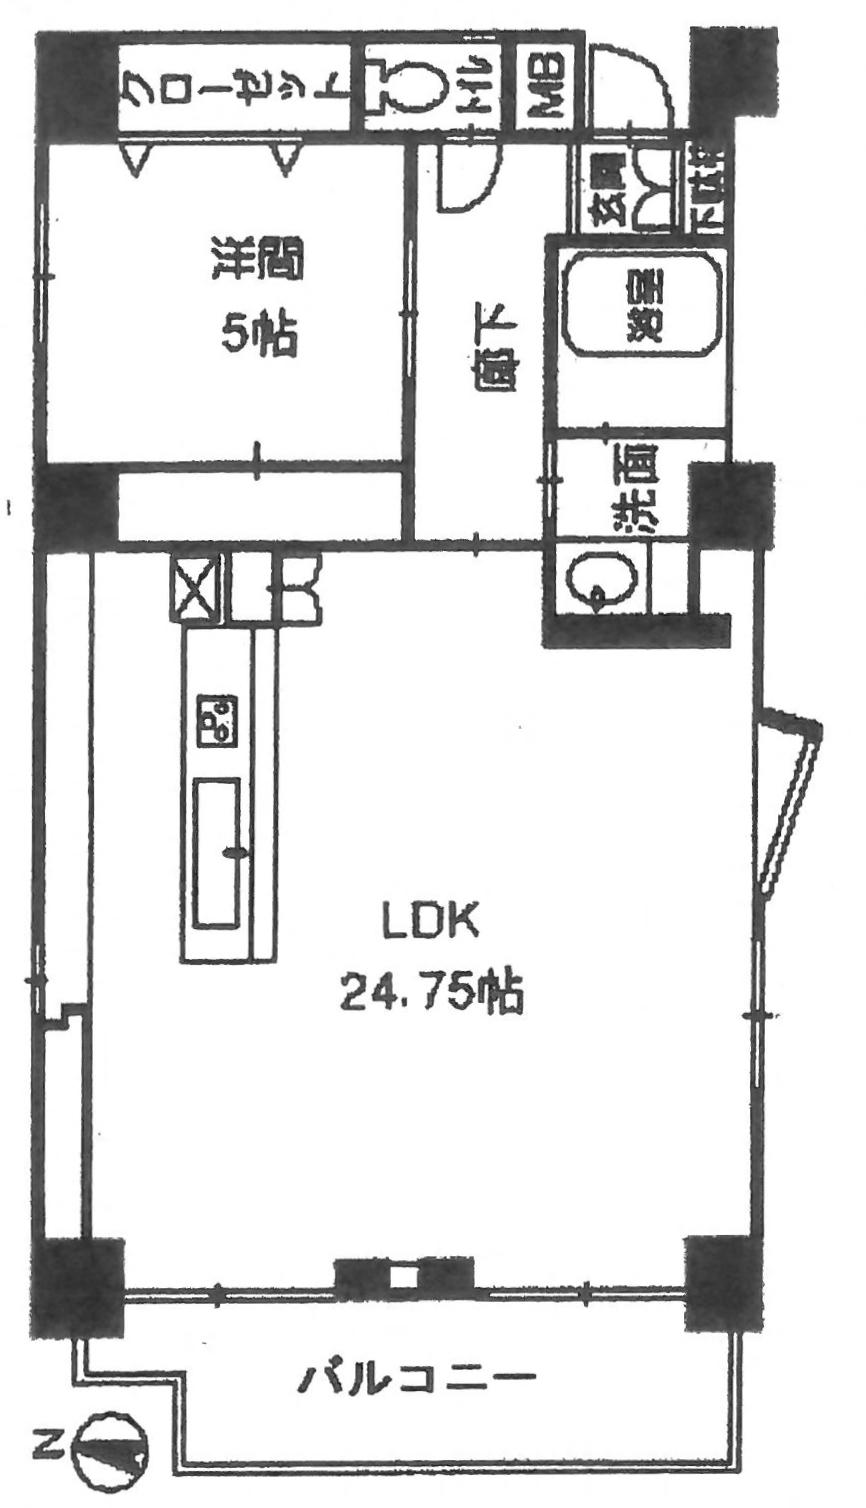 Floor plan. 1LDK, Price 17.3 million yen, Occupied area 64.58 sq m current state priority